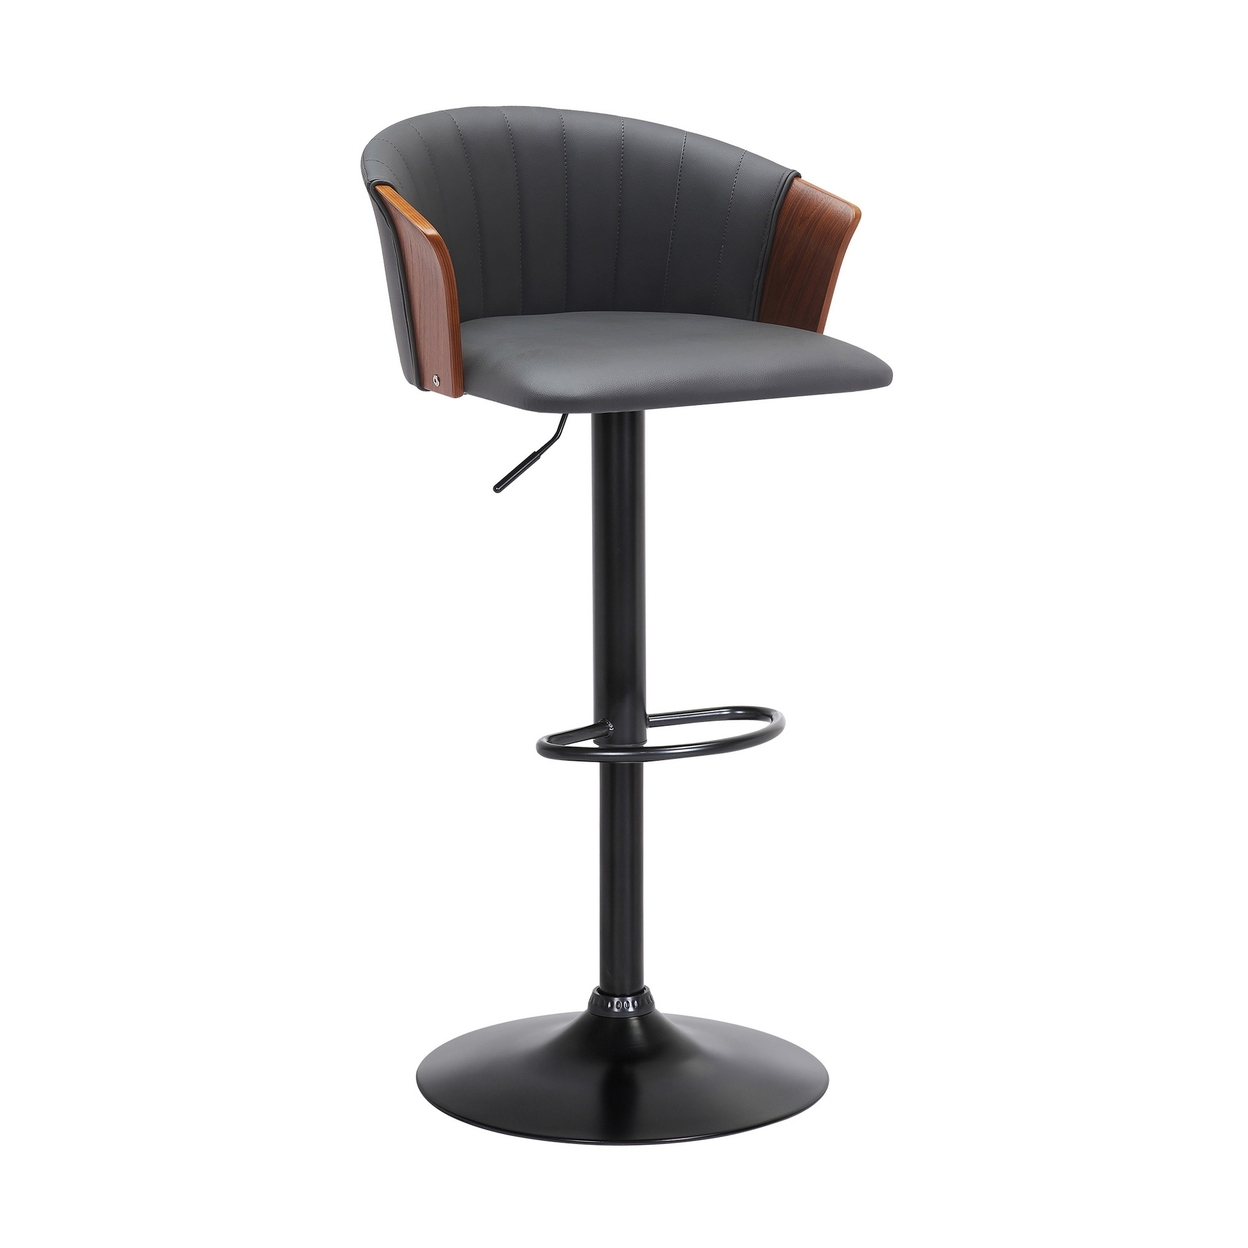 Liz 24-33 Inch Adjustable Height Swivel Barstool Chair, Gray Faux Leather - Saltoro Sherpi